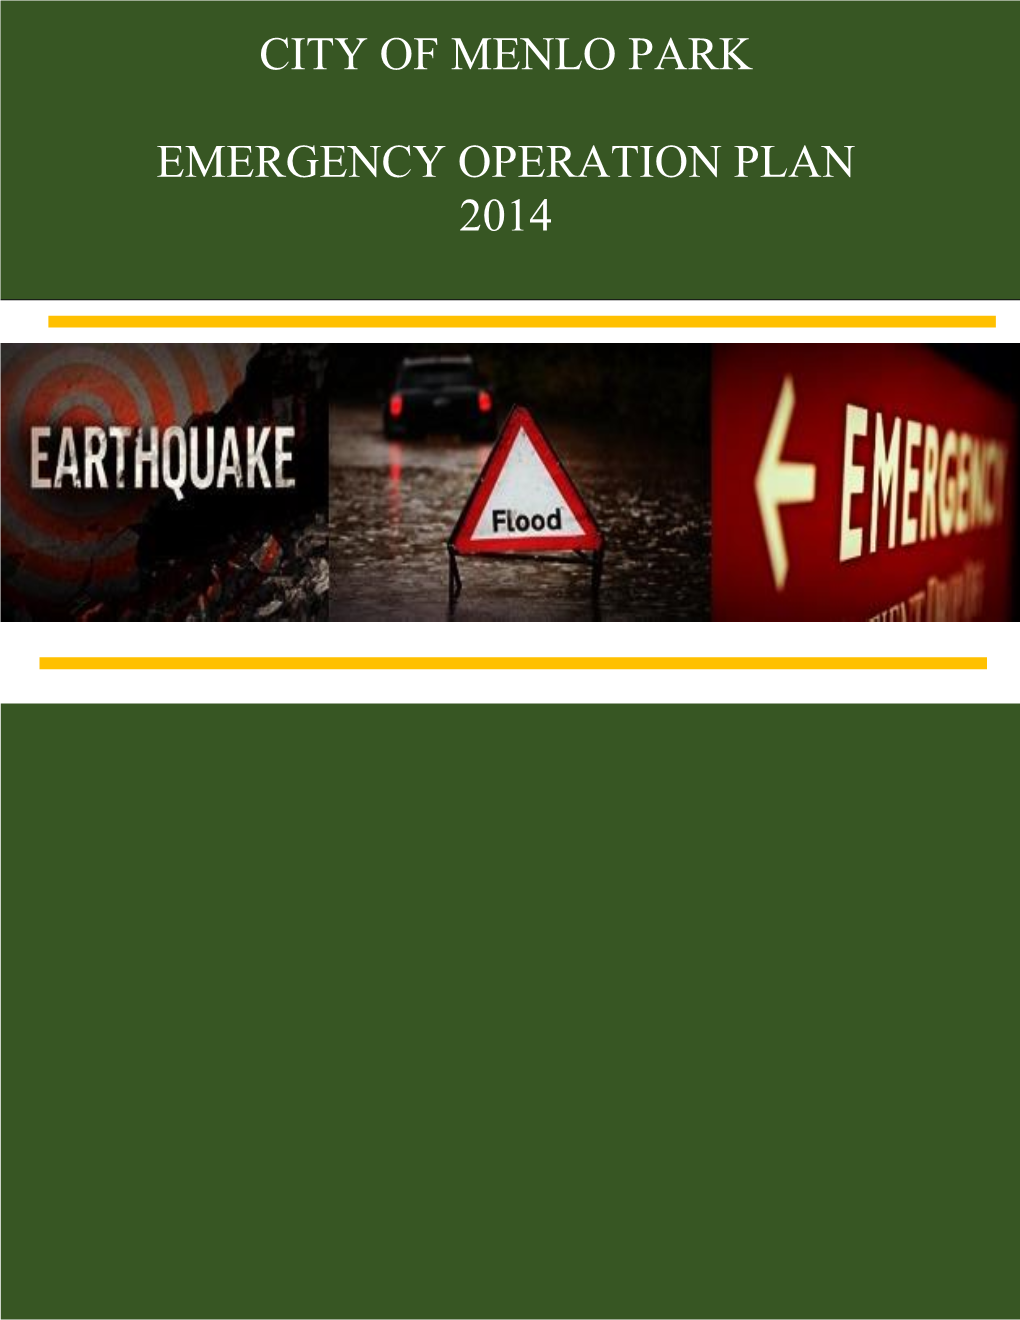 City of Menlo Park Emergency Operation Plan 2014